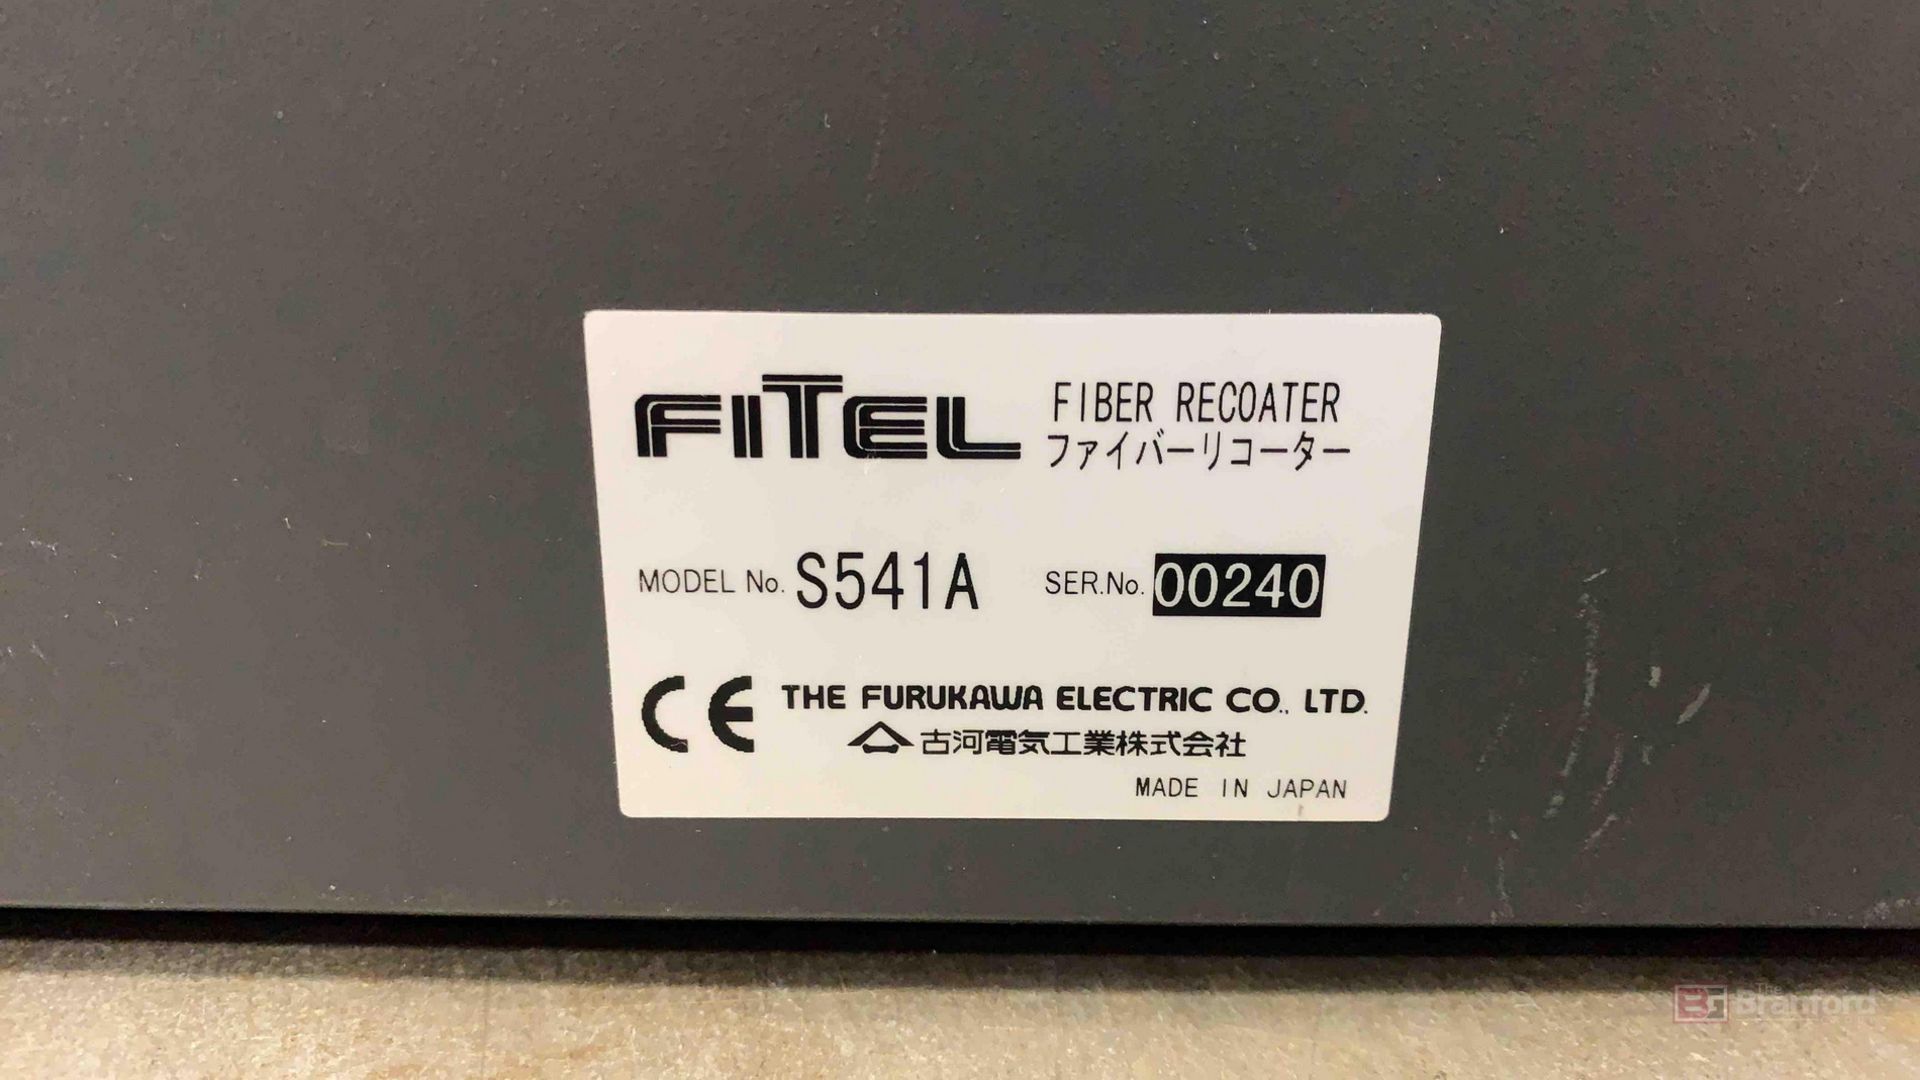 Furukawa S541A fitel fiber recoater - Image 4 of 4